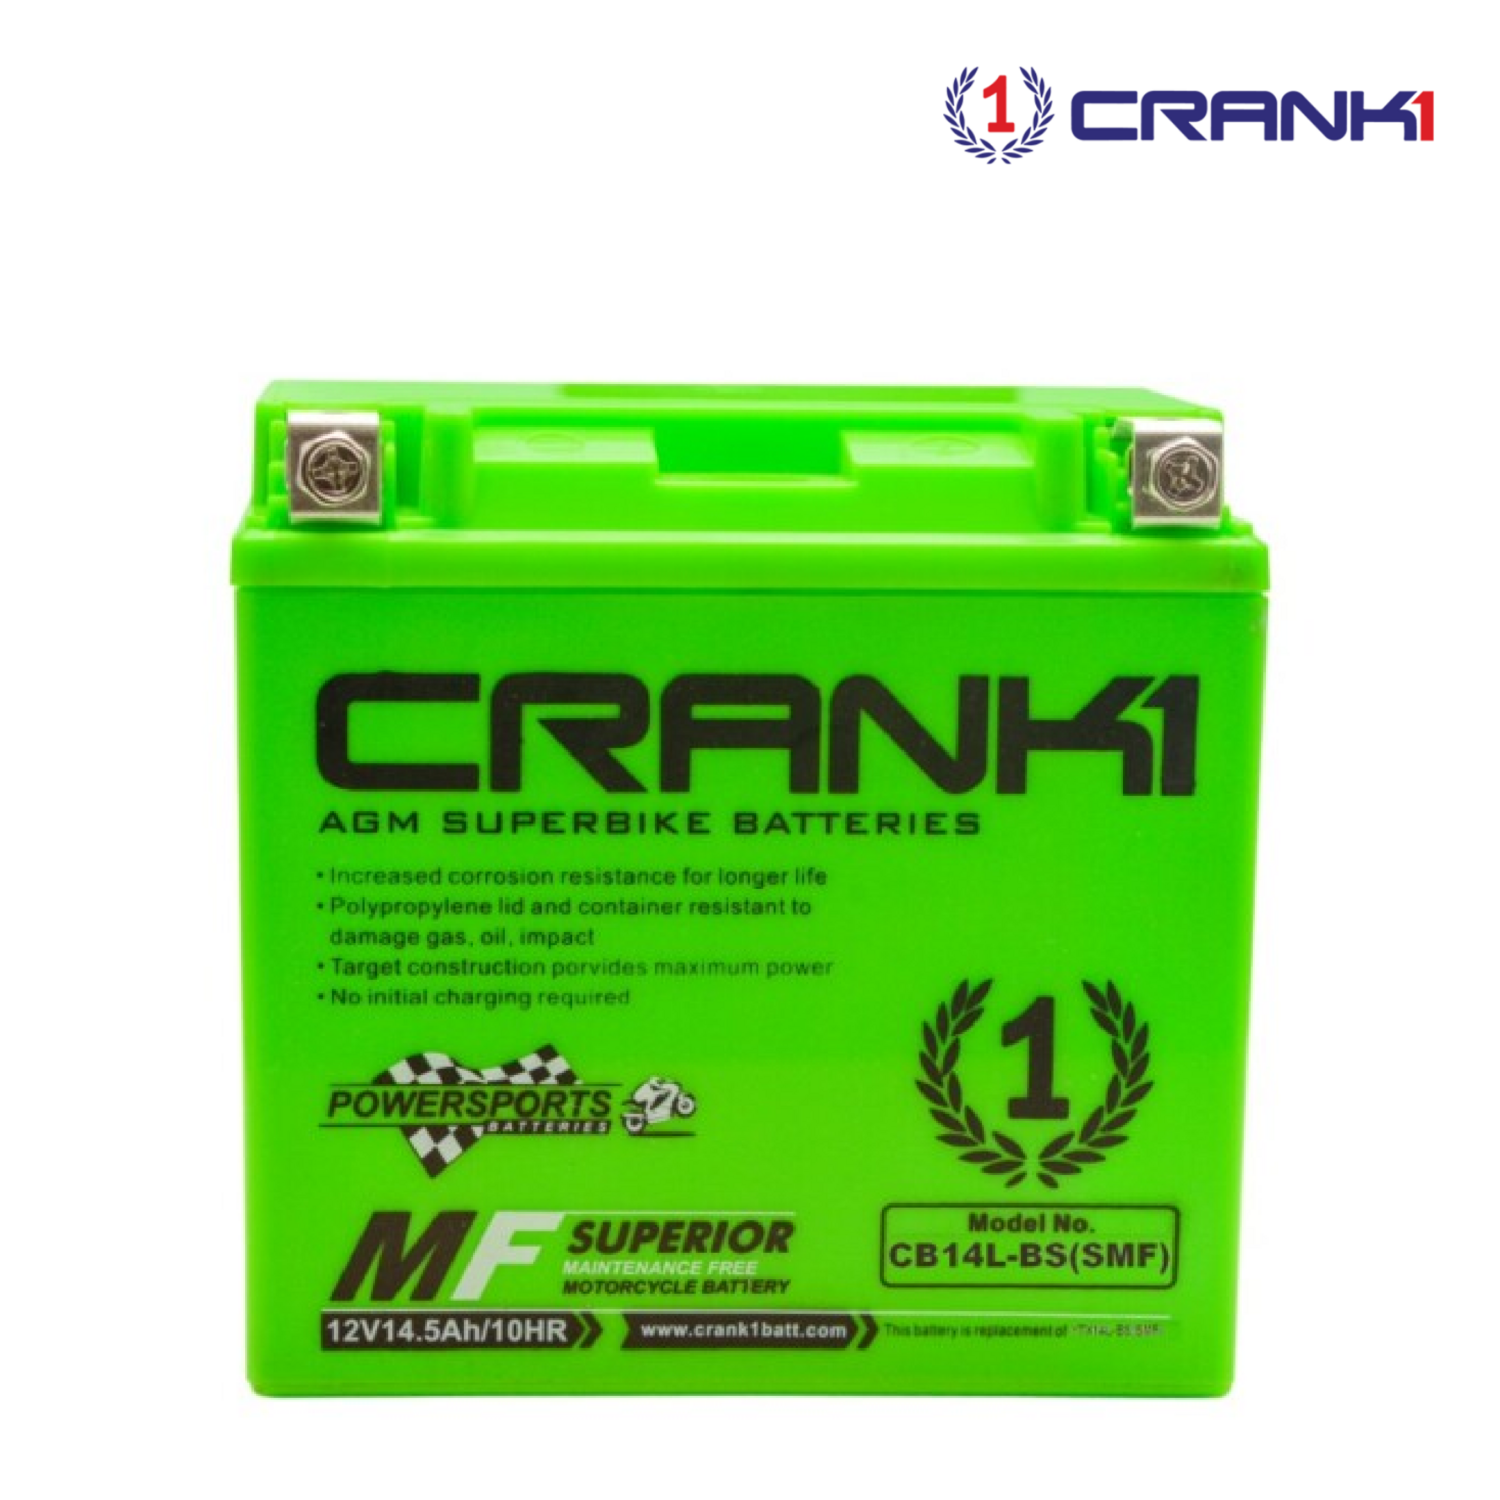 CRANK 1 AGM Superbike Batteries - CB14L-BS(SMF)